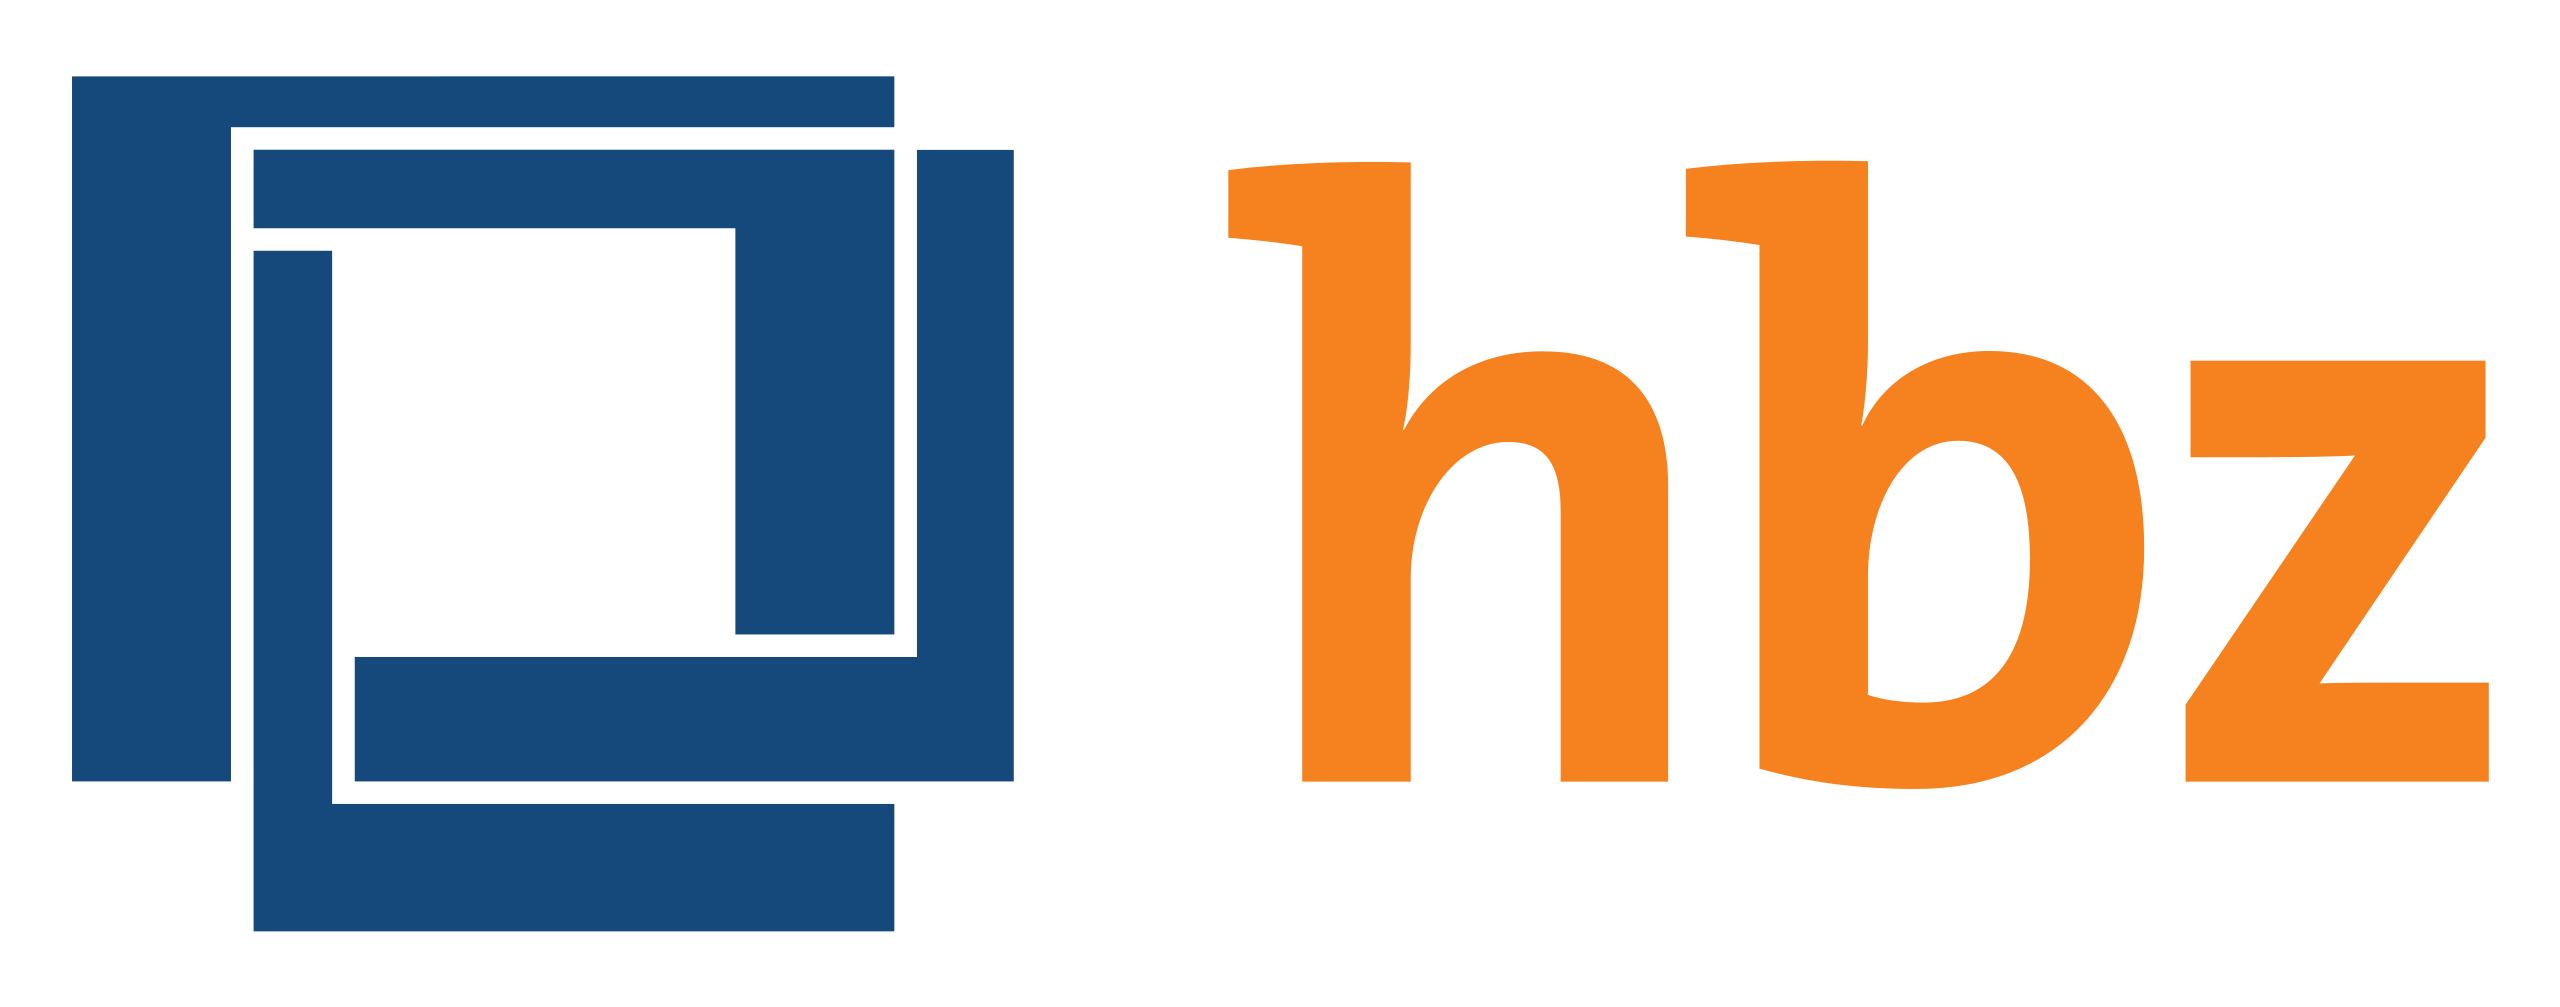 hbz logo